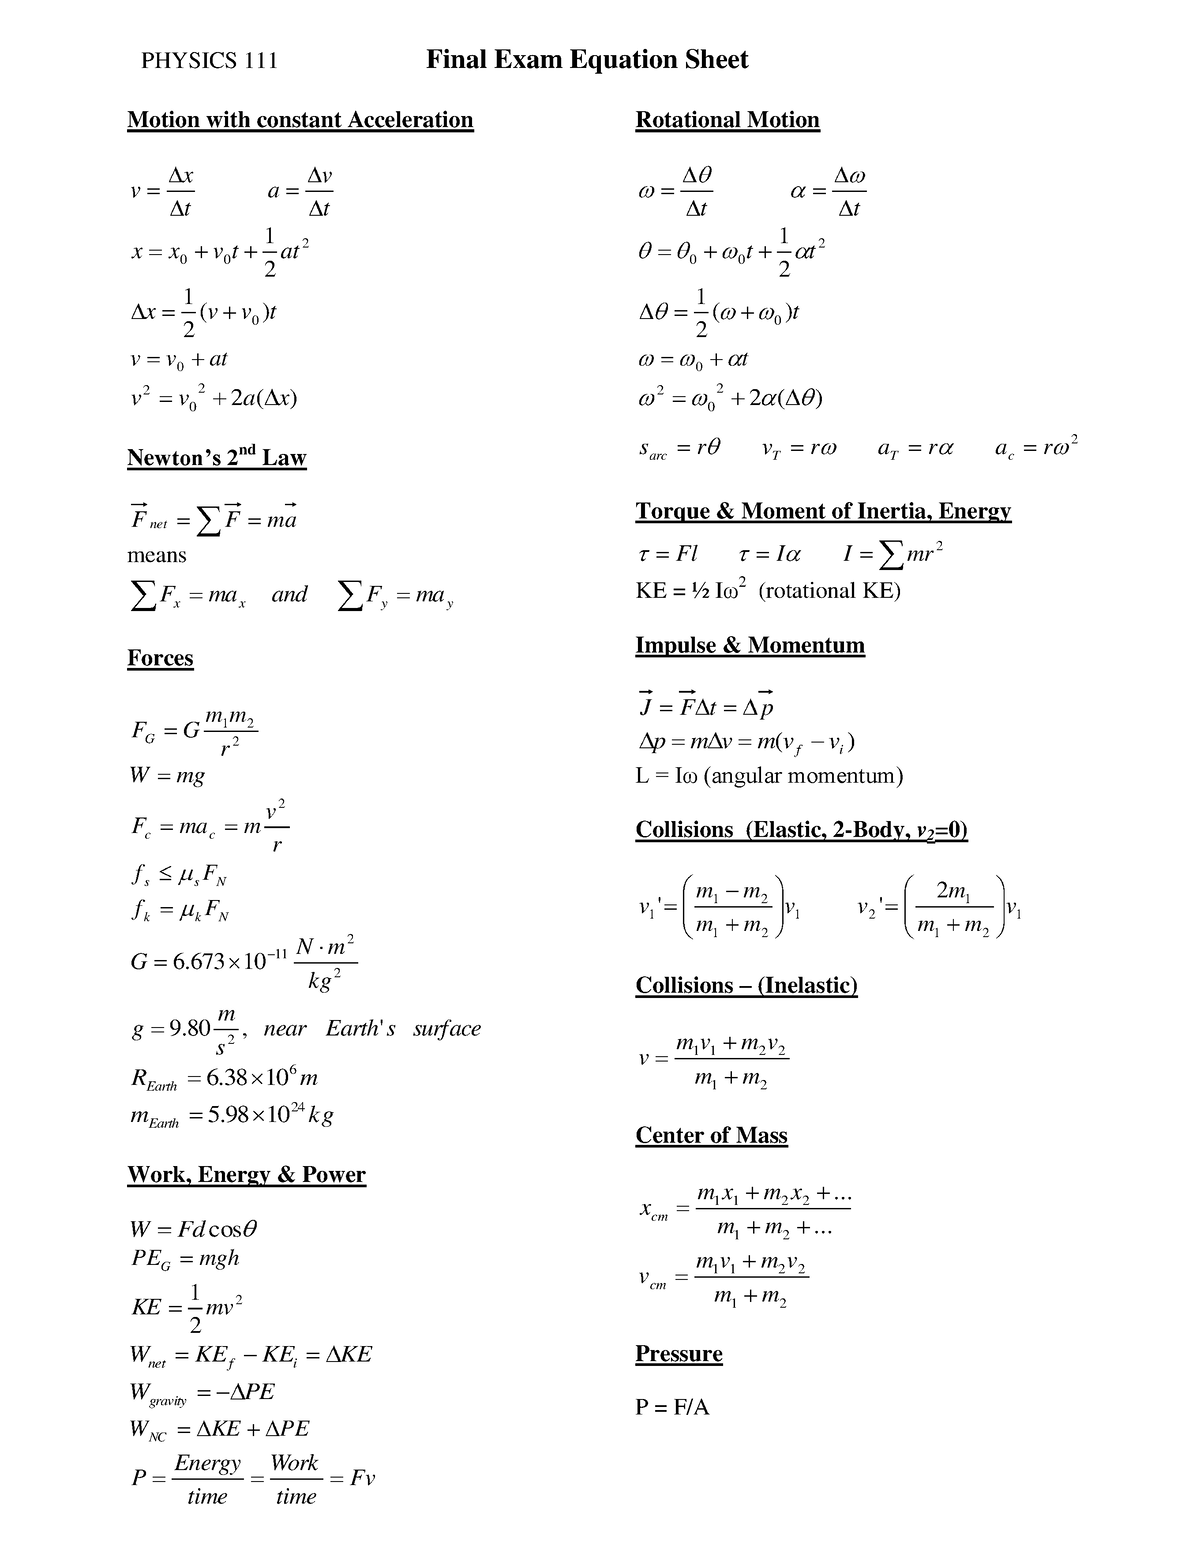 Exam formula sheet - PHYSICS 111 Final Exam Equation Sheet Motion with ...